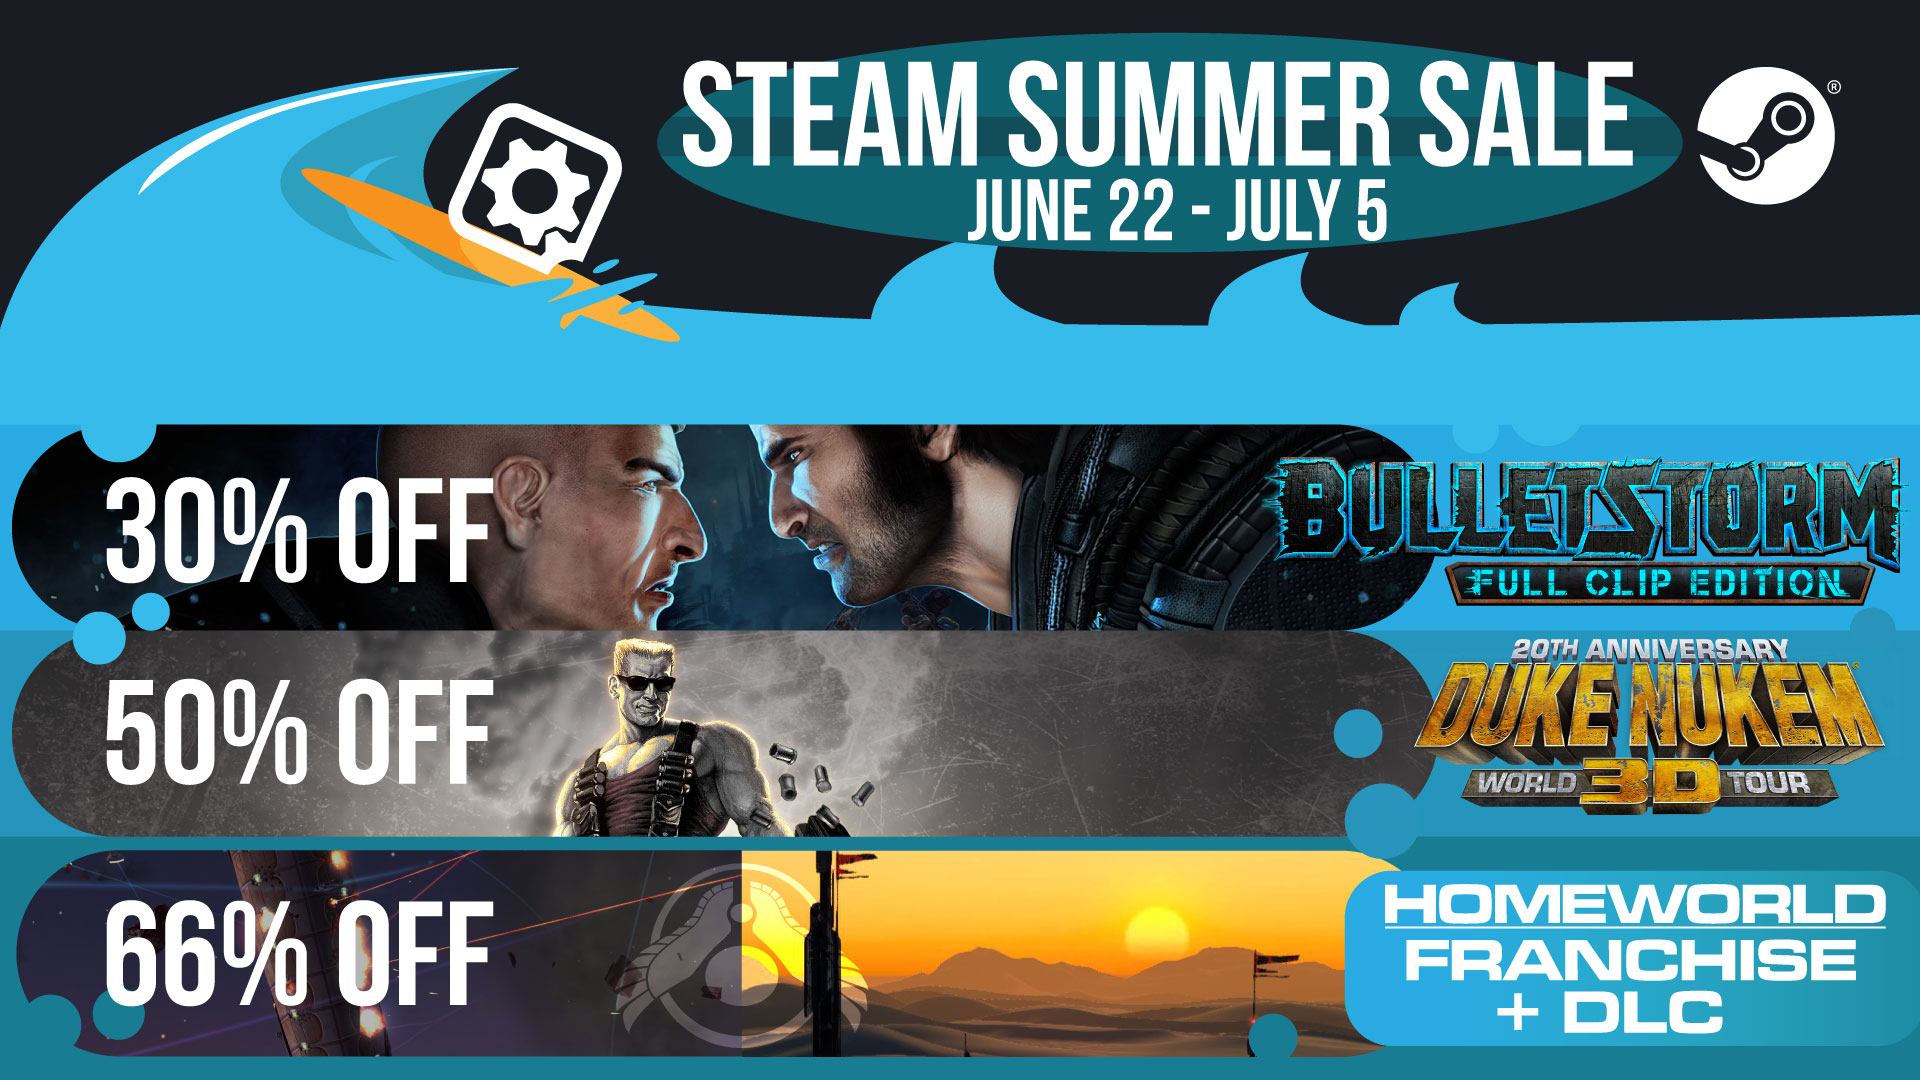 The Steam Summer Sale Brings Deals for Bulletstorm, Duke Nukem, and